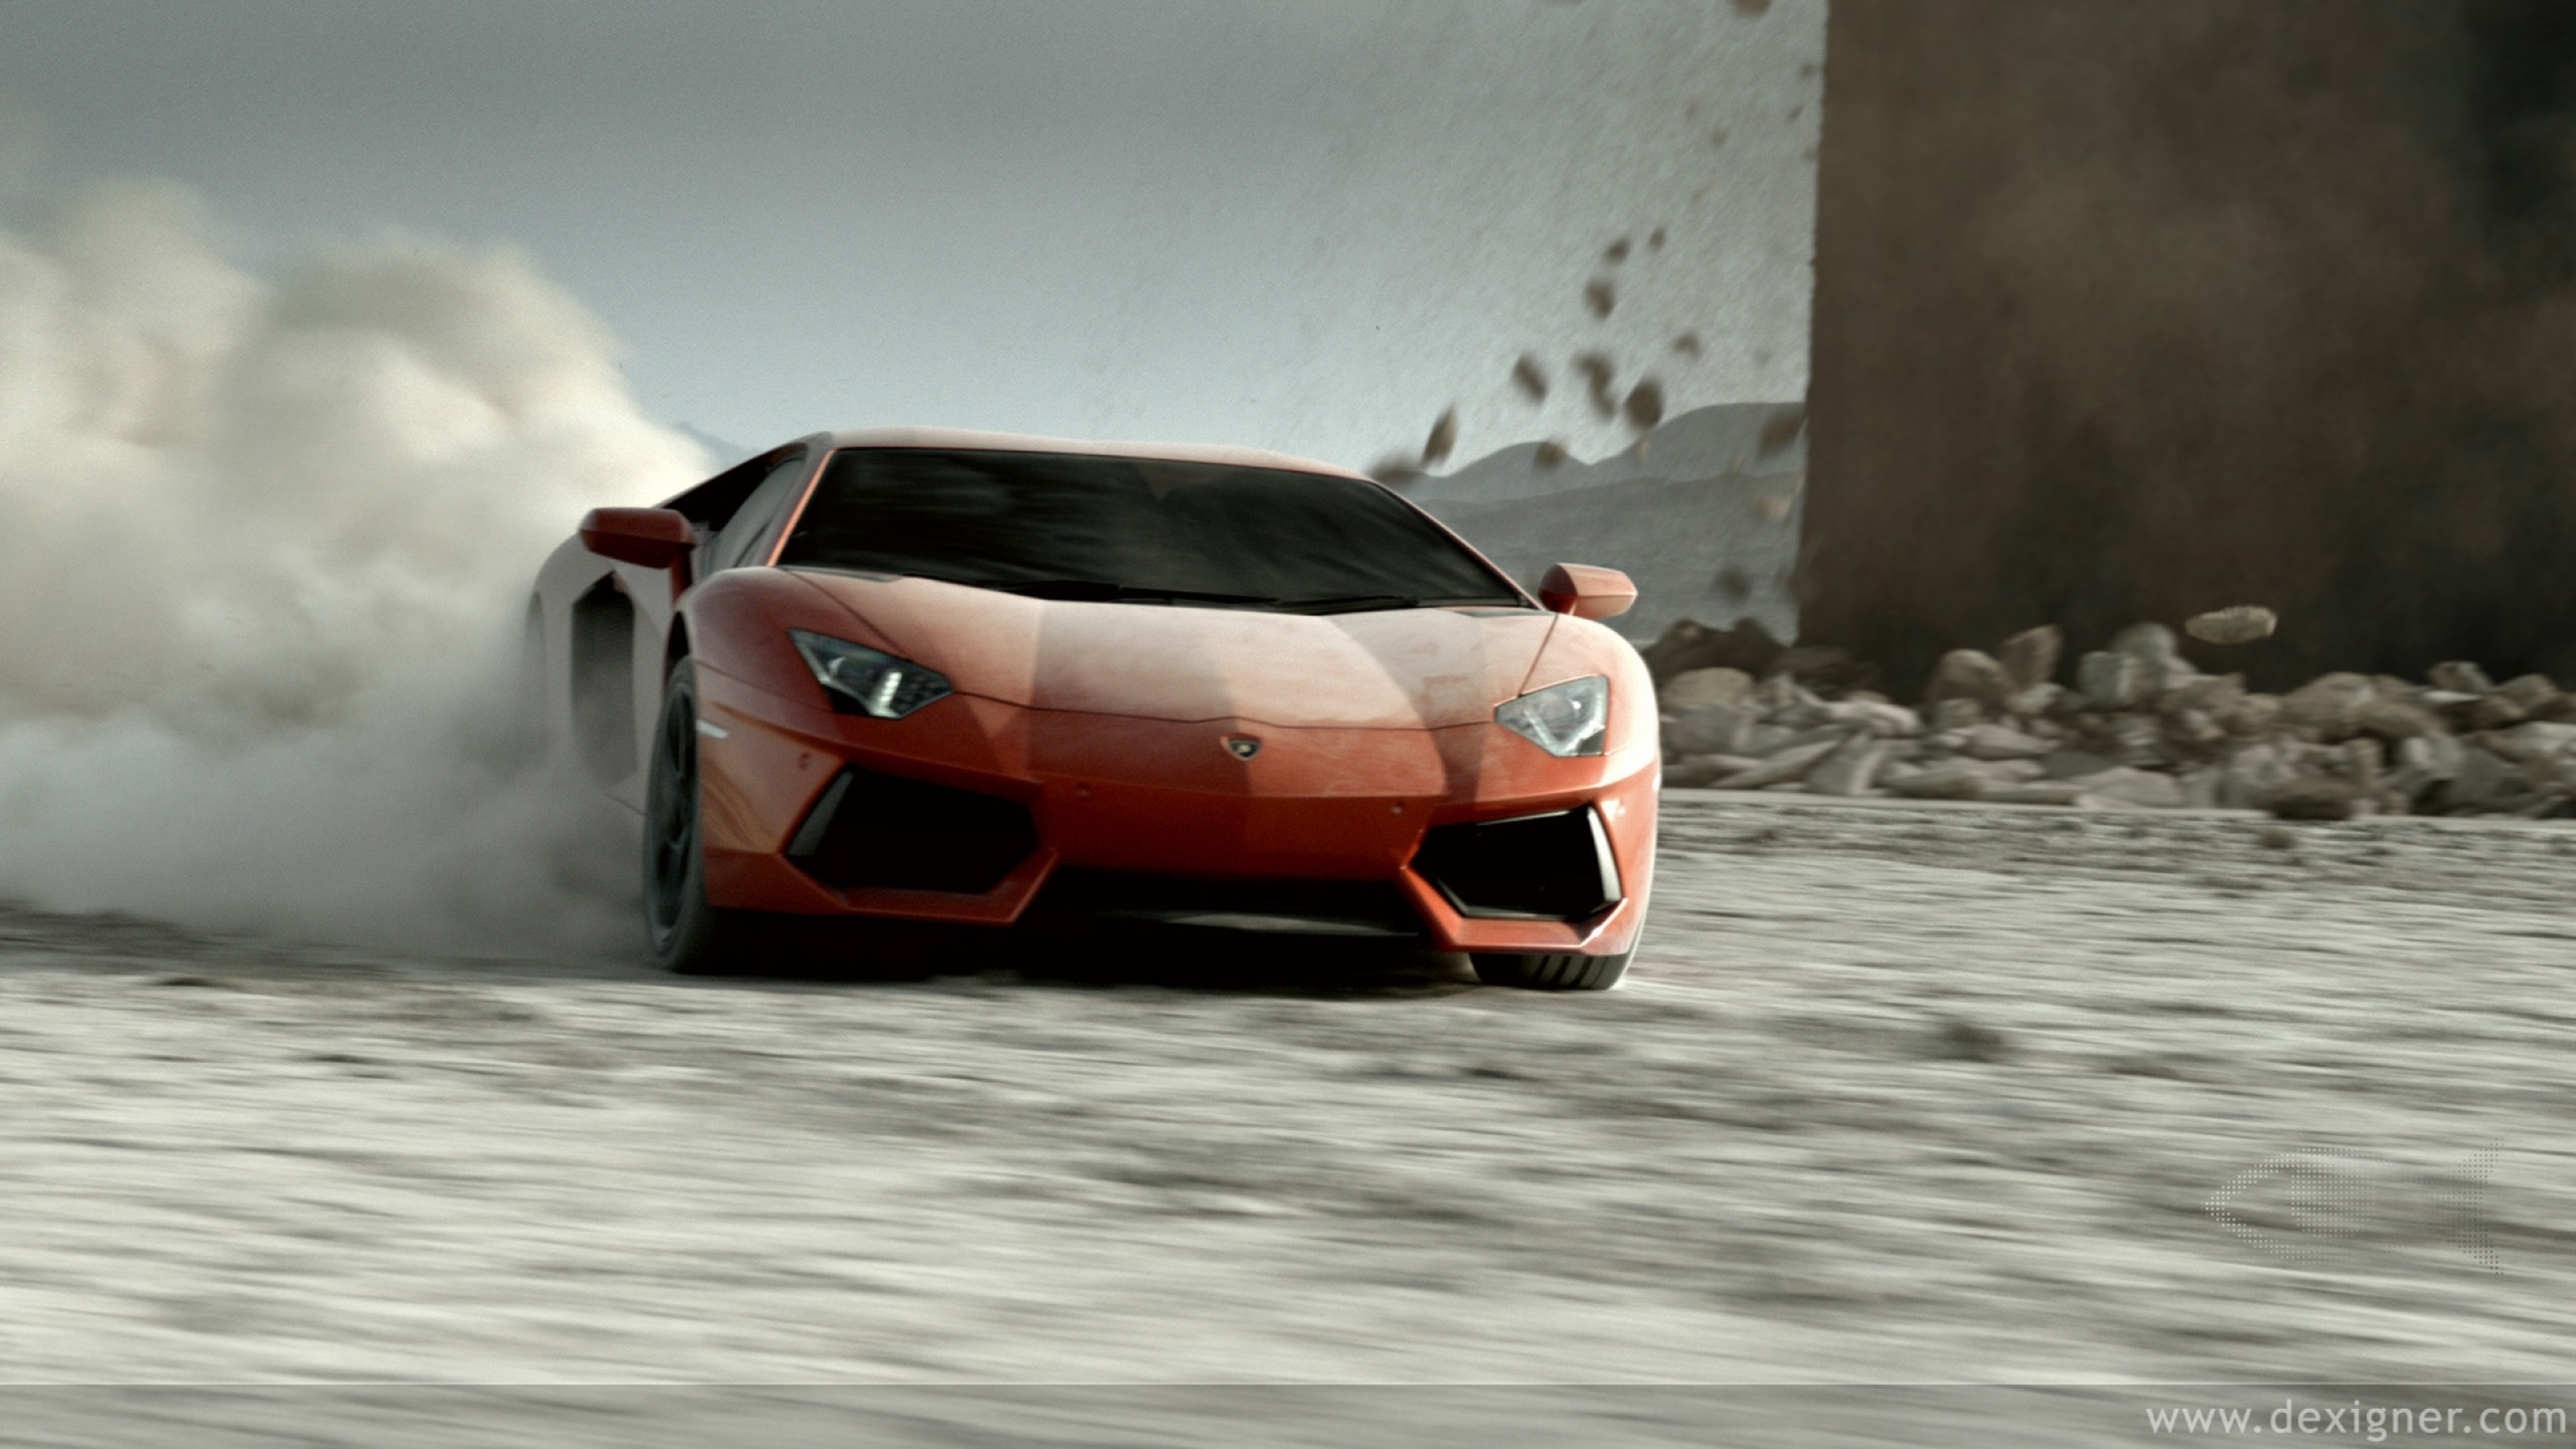 3840x2160 Hot cars Â· Lamborghini aventador v12 Ultra HD 4K Wallpapers